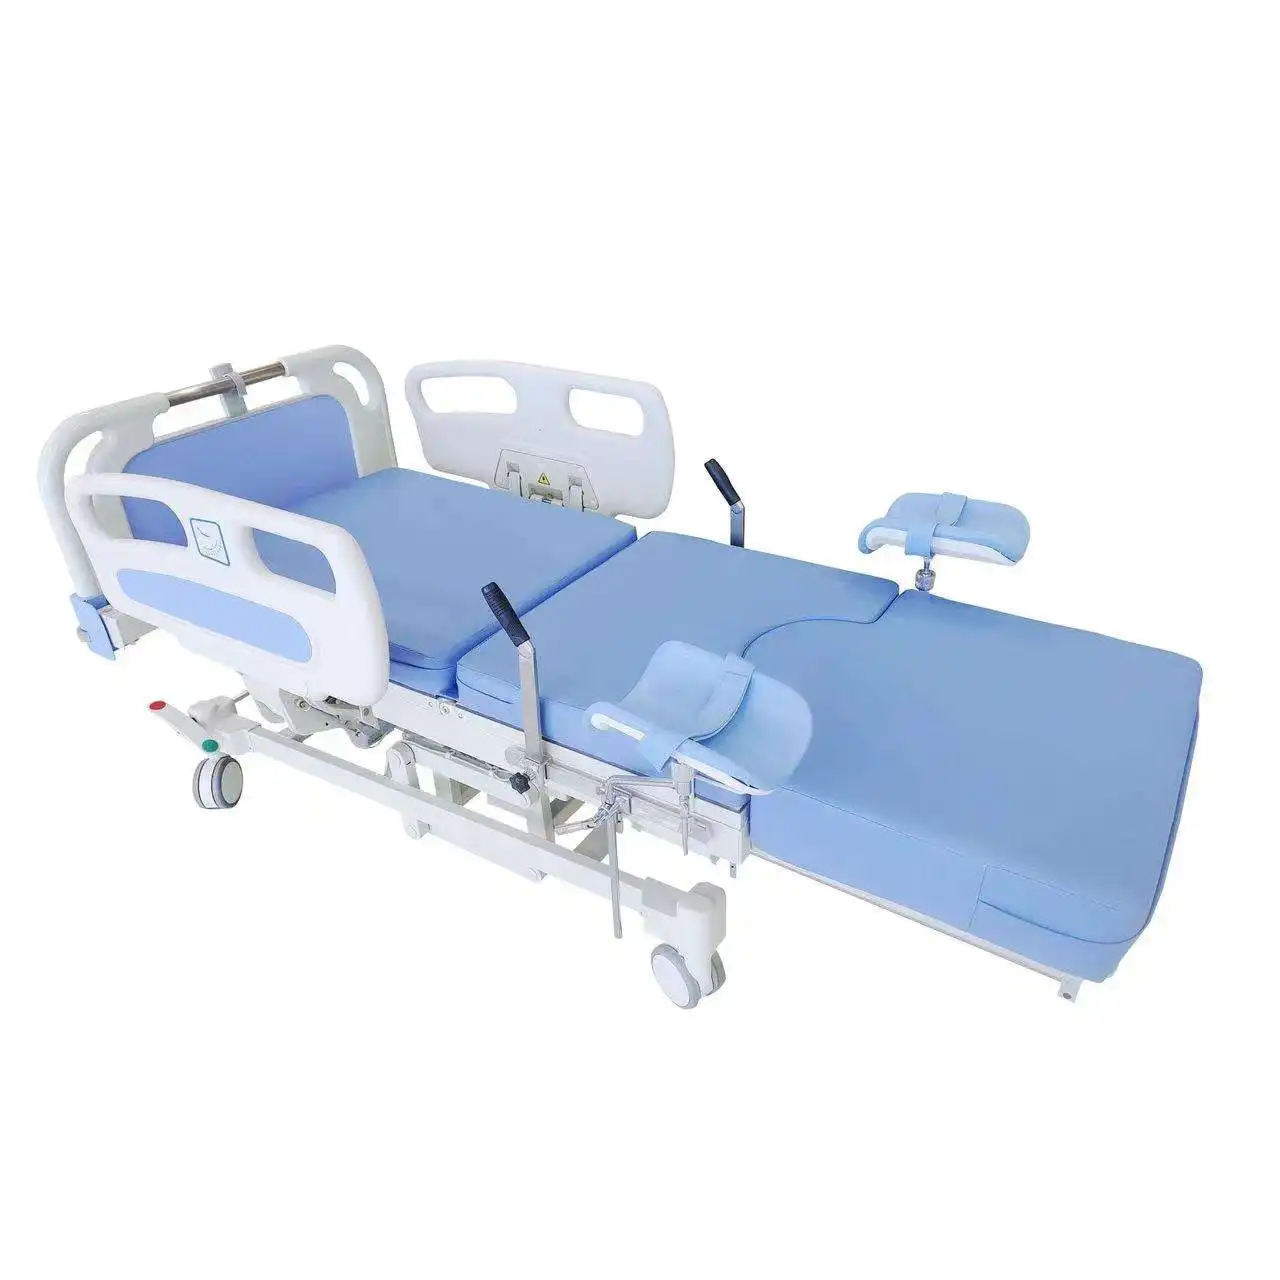 Equipamento hospitalar mesa obstétrica universal cama elétrica para parto médico de maternidade ginecologia